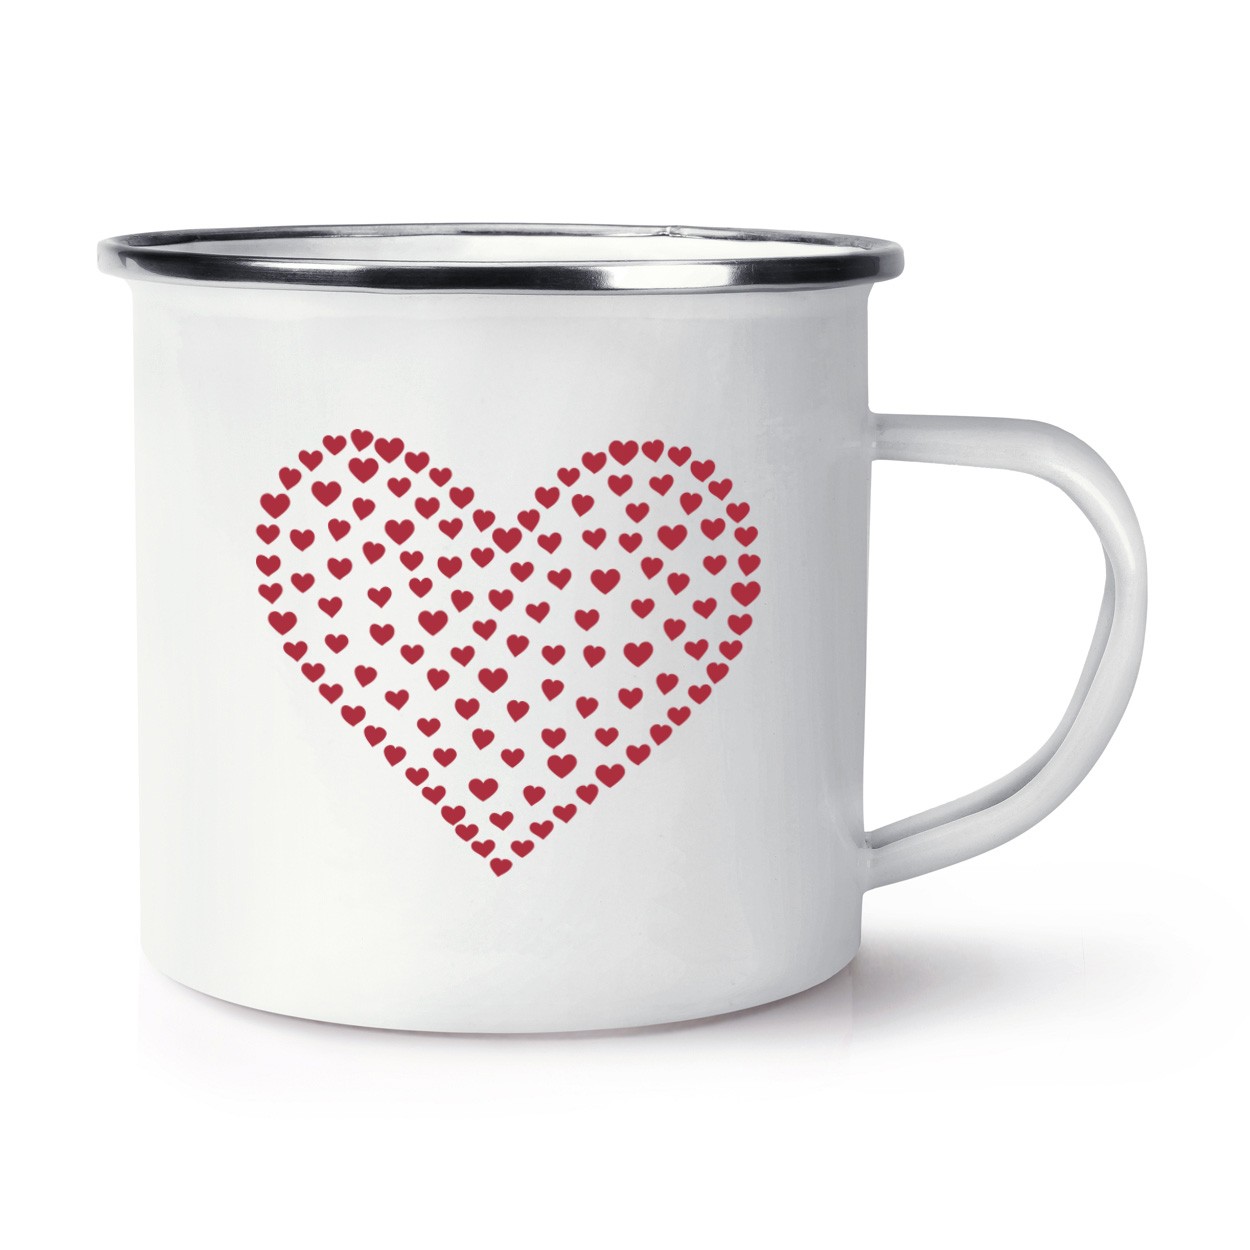 Heart Of Hearts Retro Enamel Mug Cup